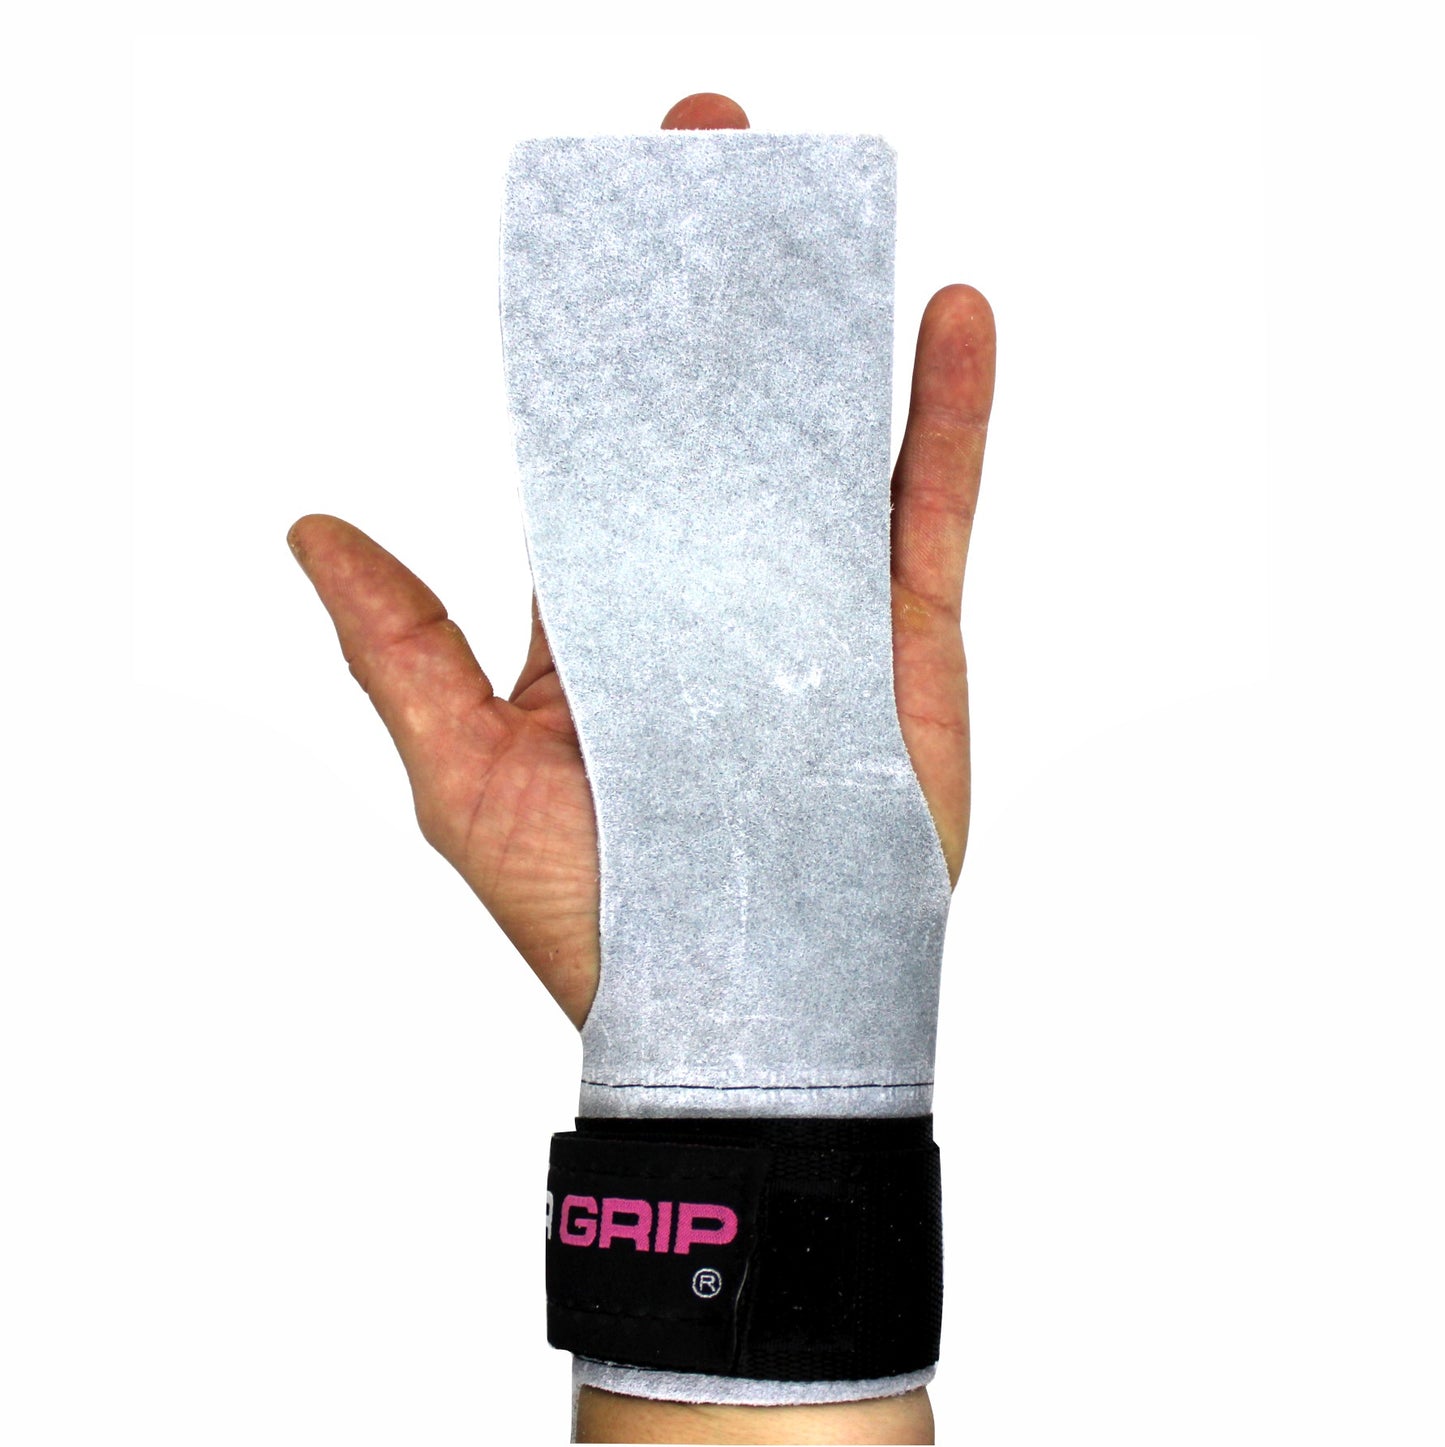 POWER GRIP Store - Calleras 3 dedos – Power Grip Store